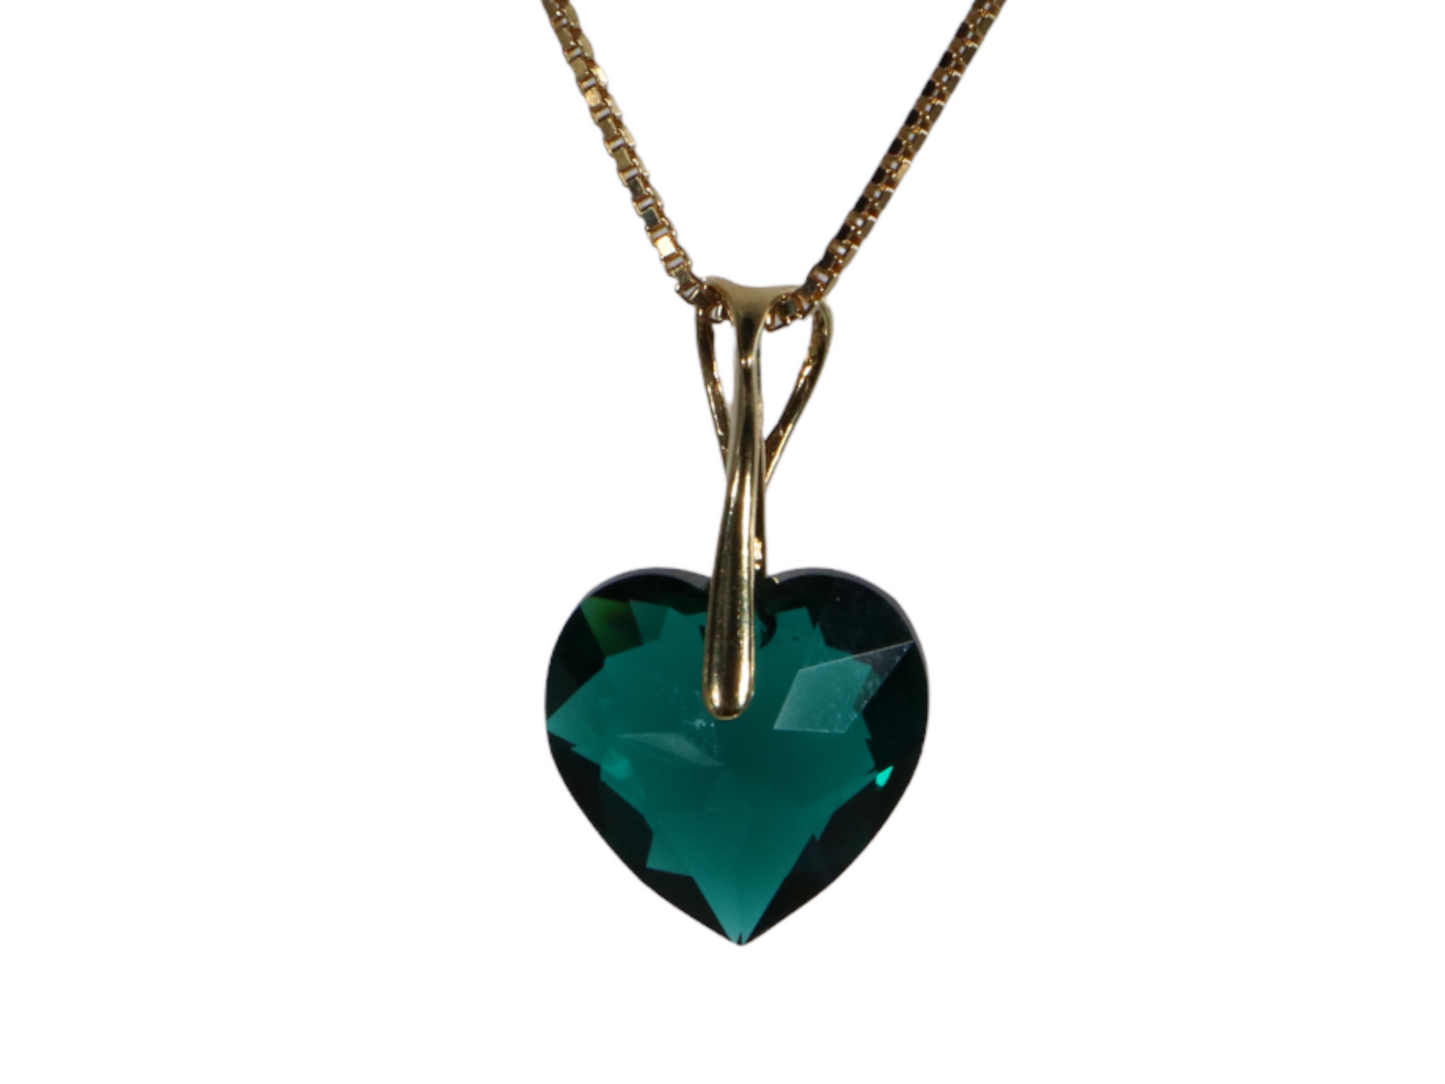 Collier avec cristaux Swarovski, vert émeraude, argent, HEART